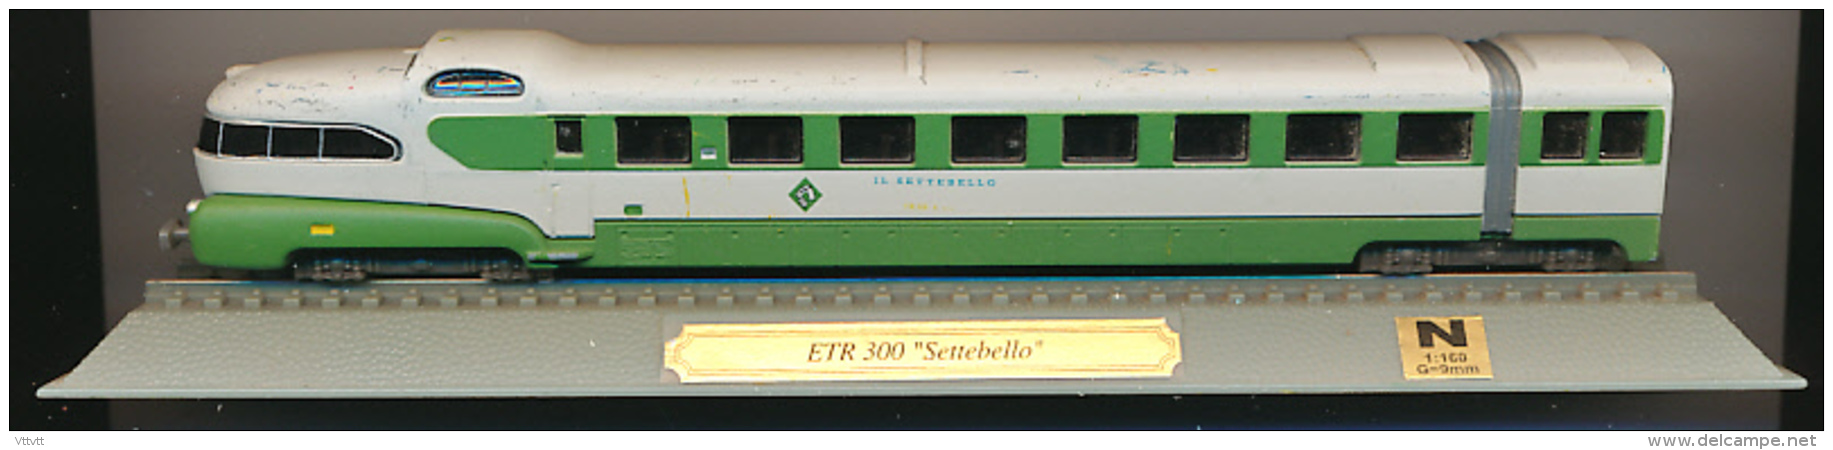 Locomotive : ETR 300 "Settebello", Echelle N 1/160, G = 9 Mm, Italy, Italie - Locomotieven